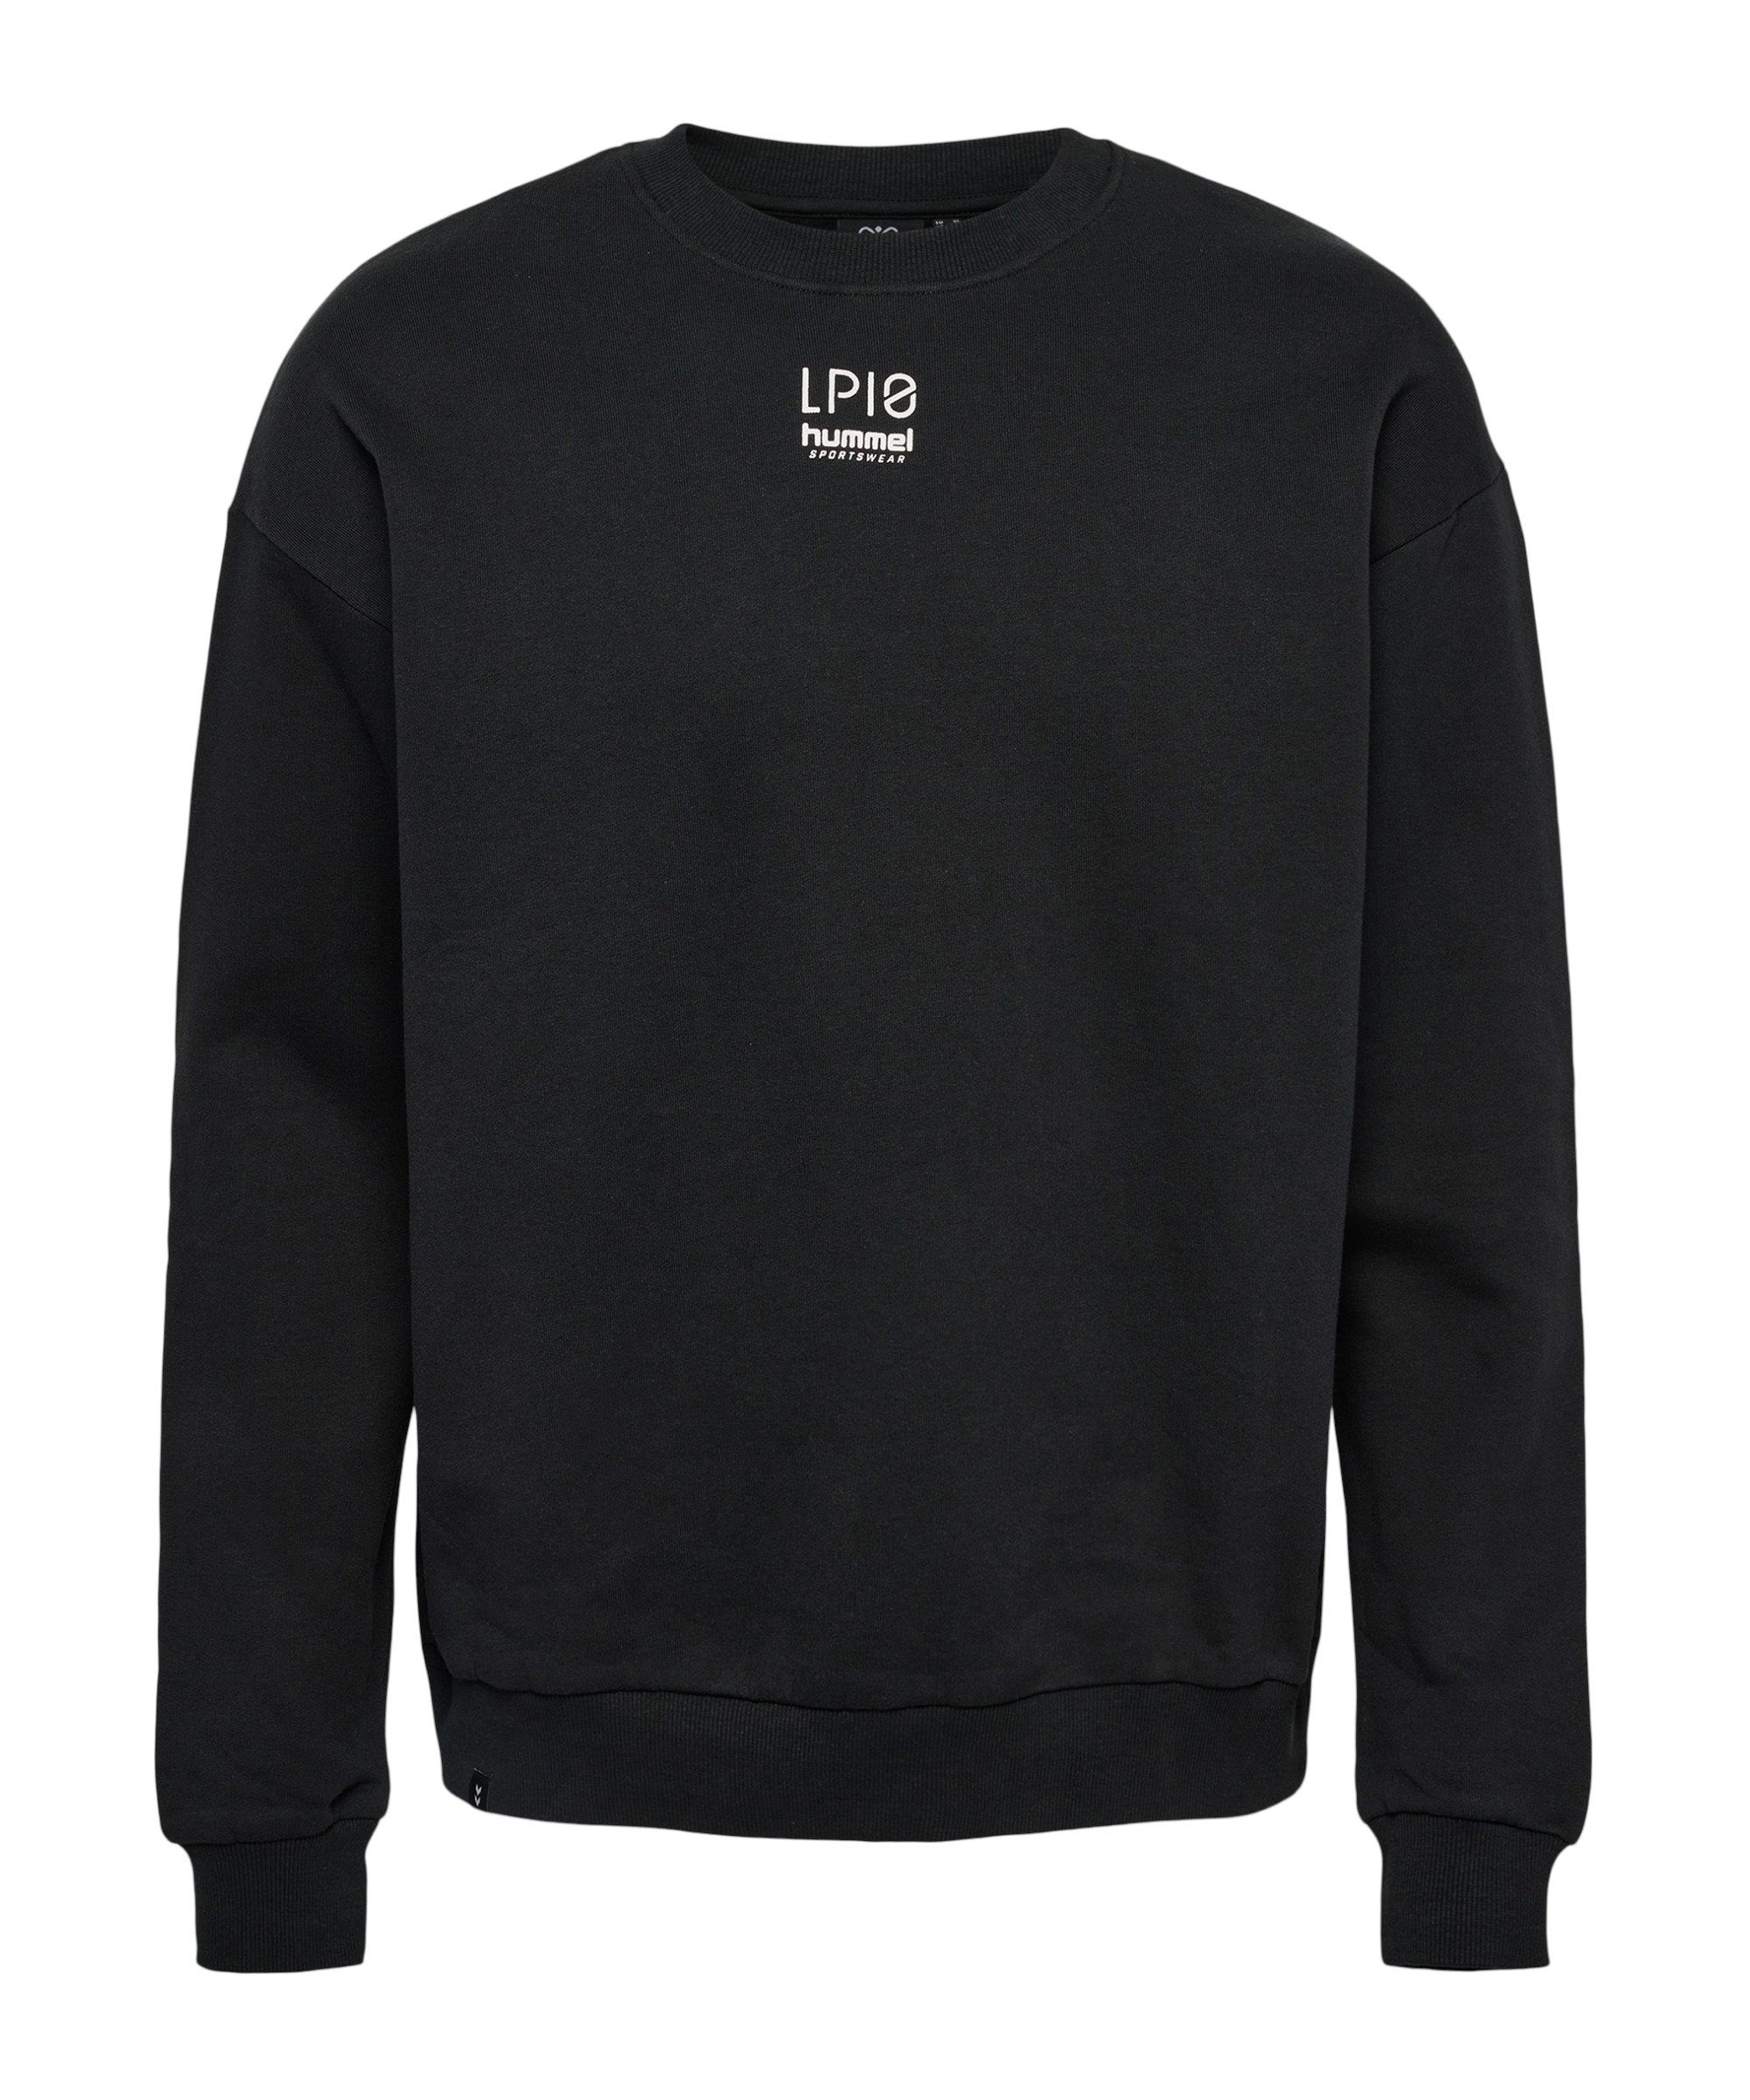 Sweatshirt hmlLP10 hummel schwarz Sweatshirt Boxy